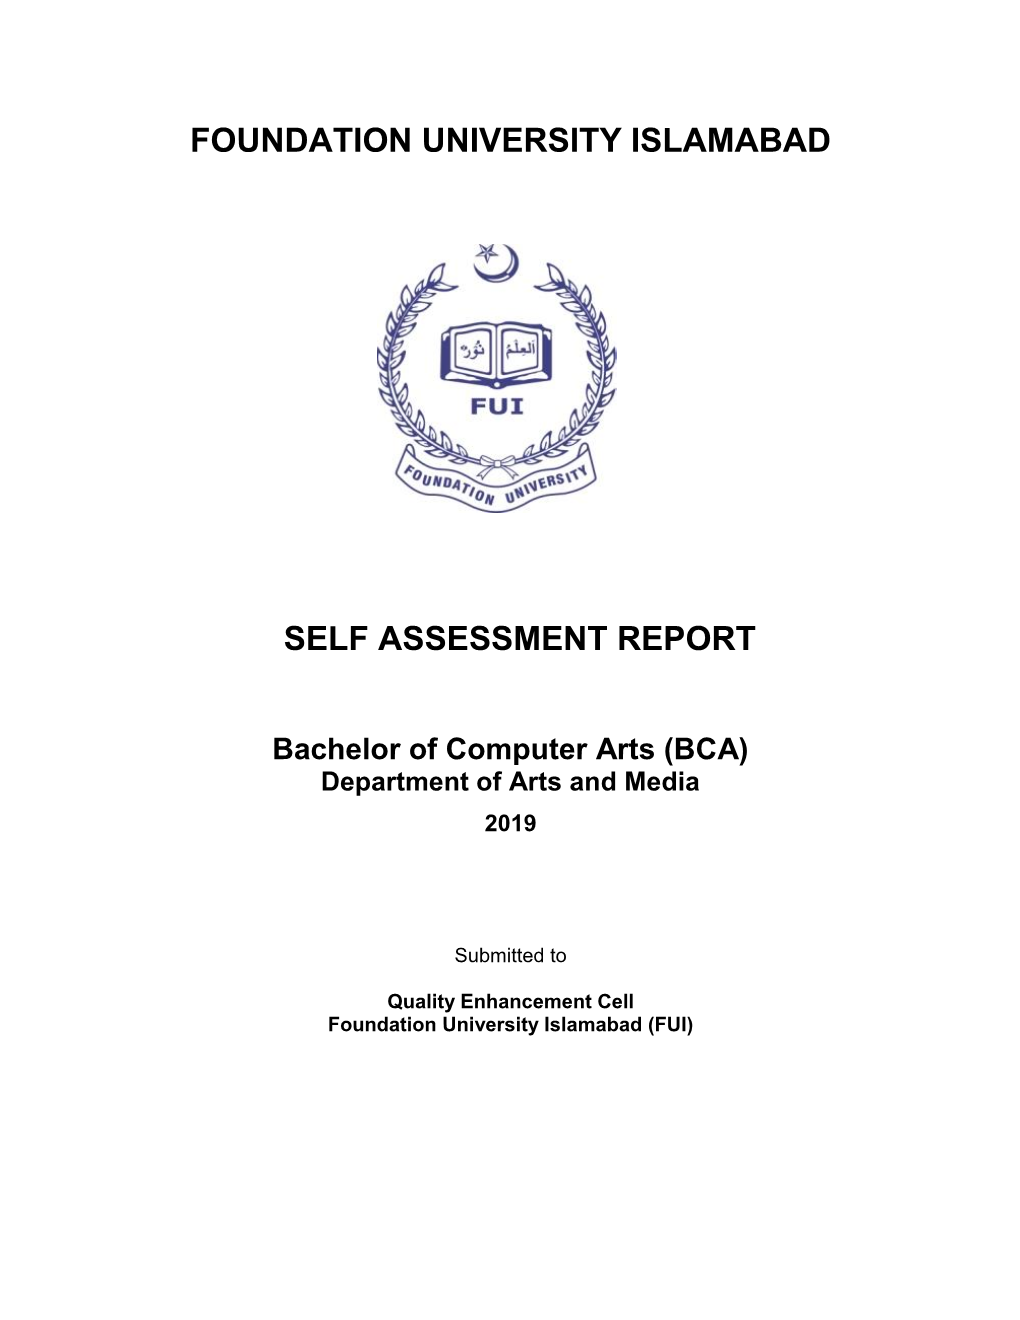 Foundation University Islamabad Self Assessment